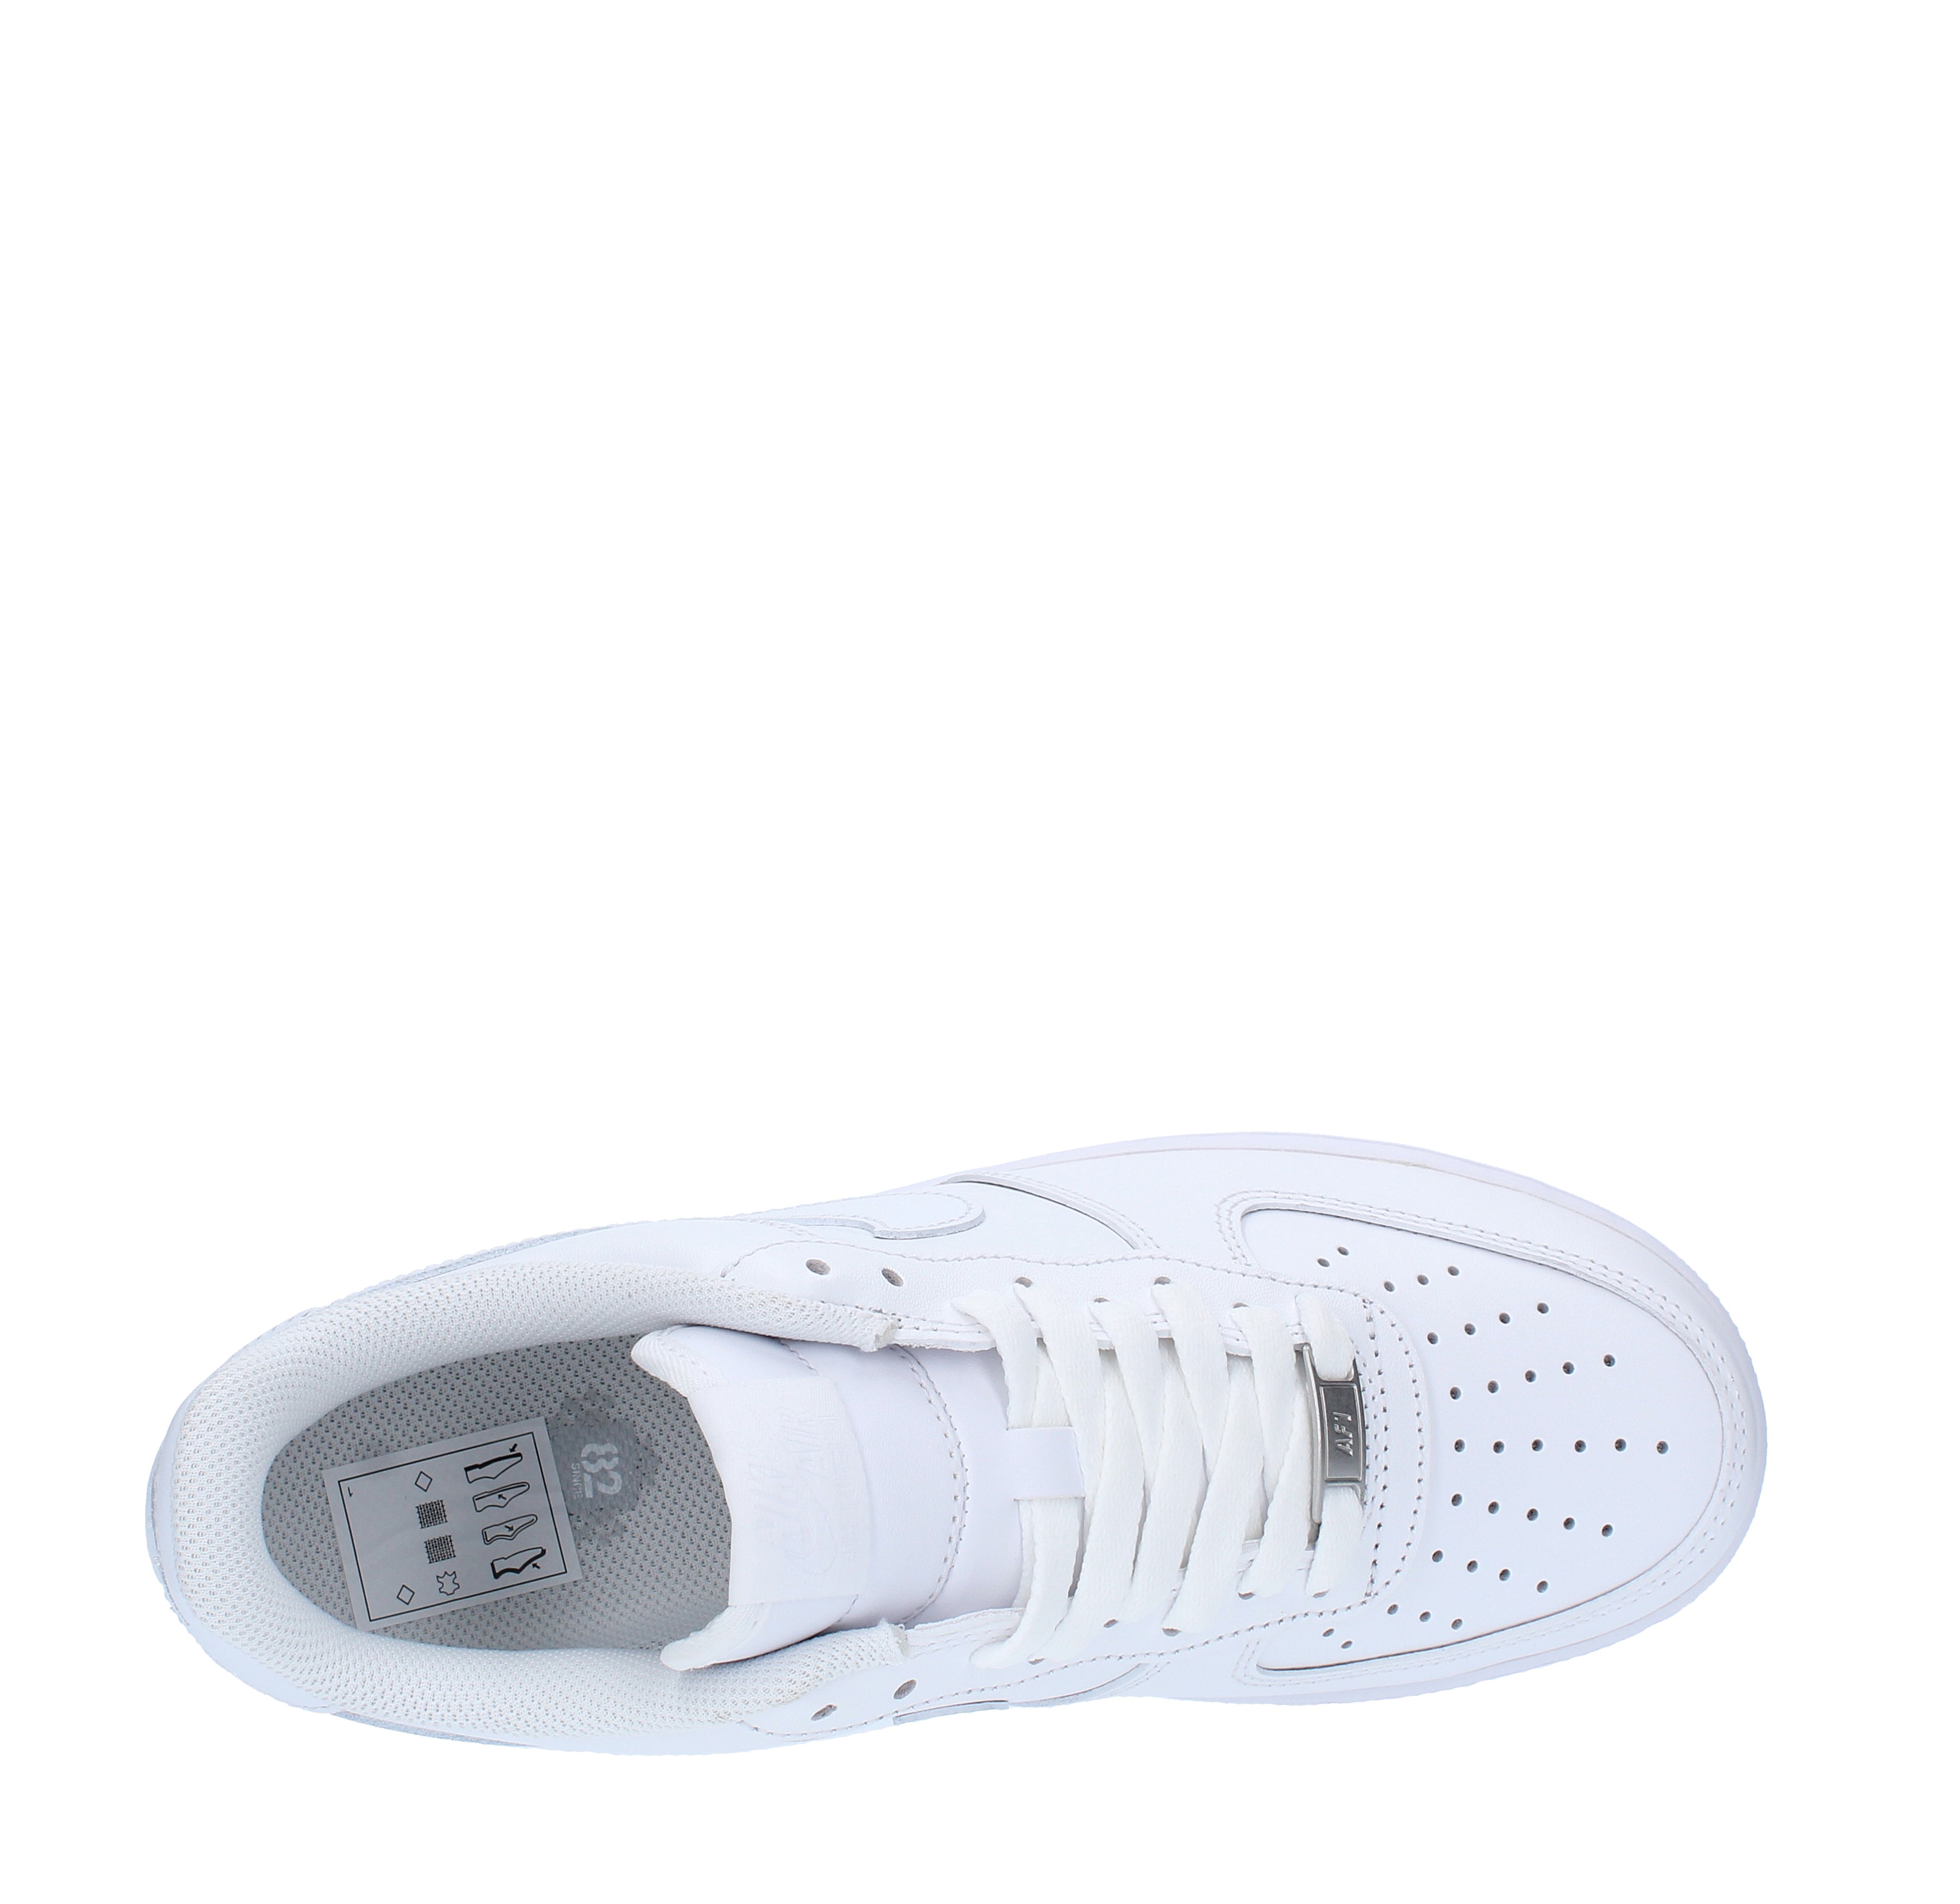 Sneakers modello NIKE AIR AIR FORCE 1 in pelle - NIKE - Ginevra calzature